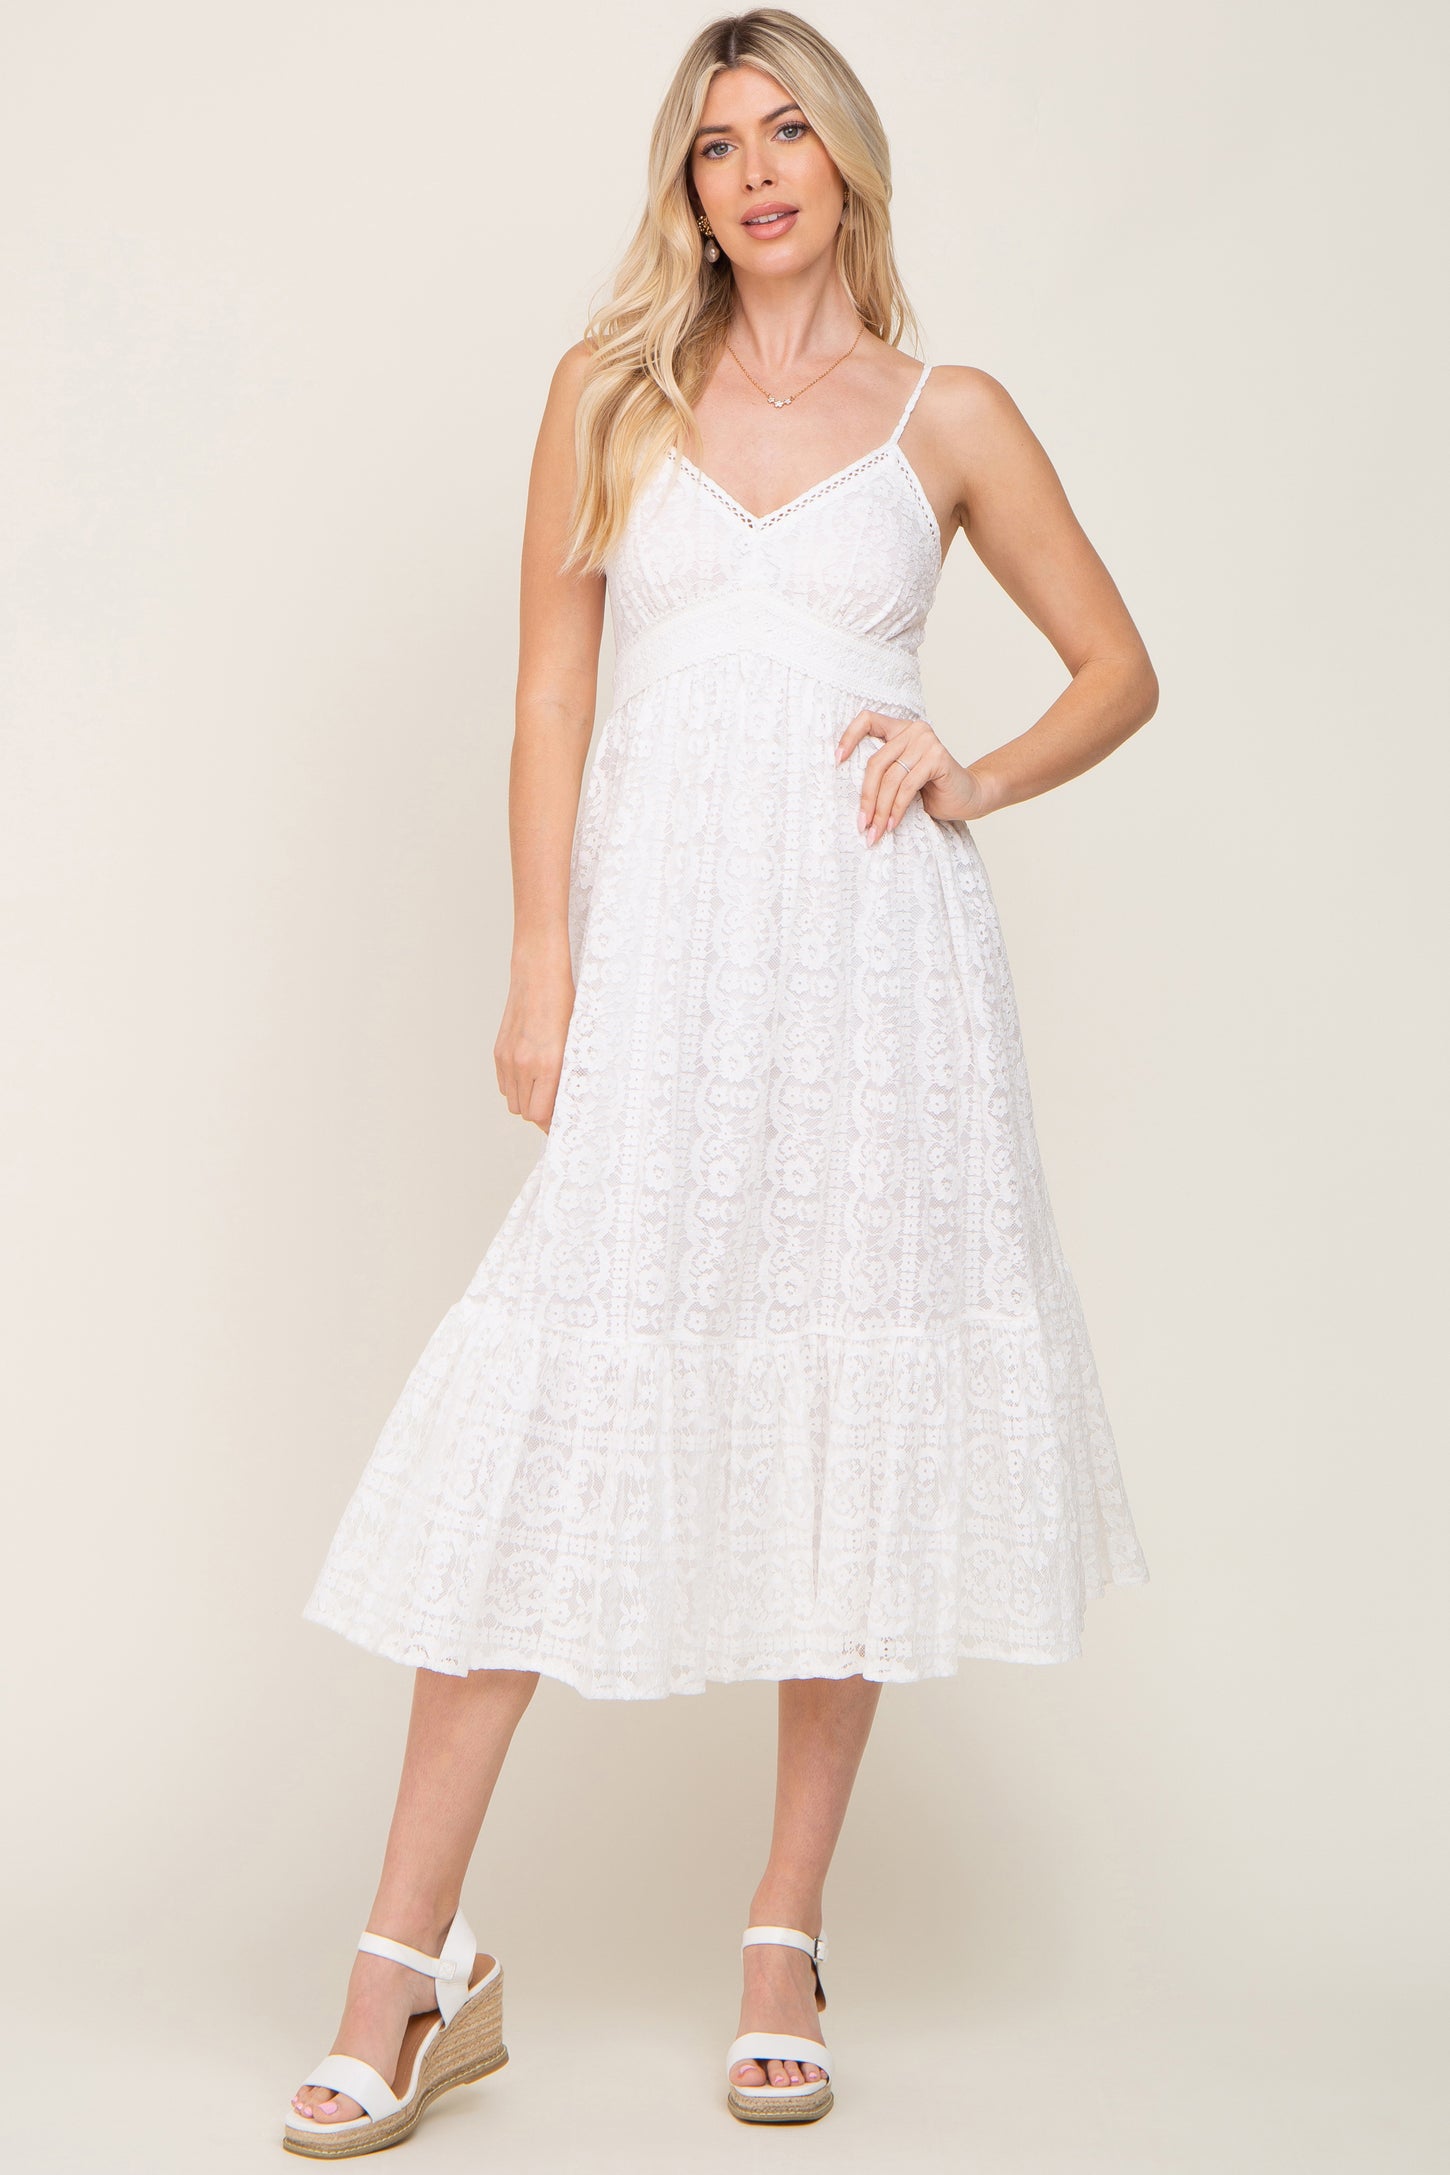 White Lace Crochet Midi Dress